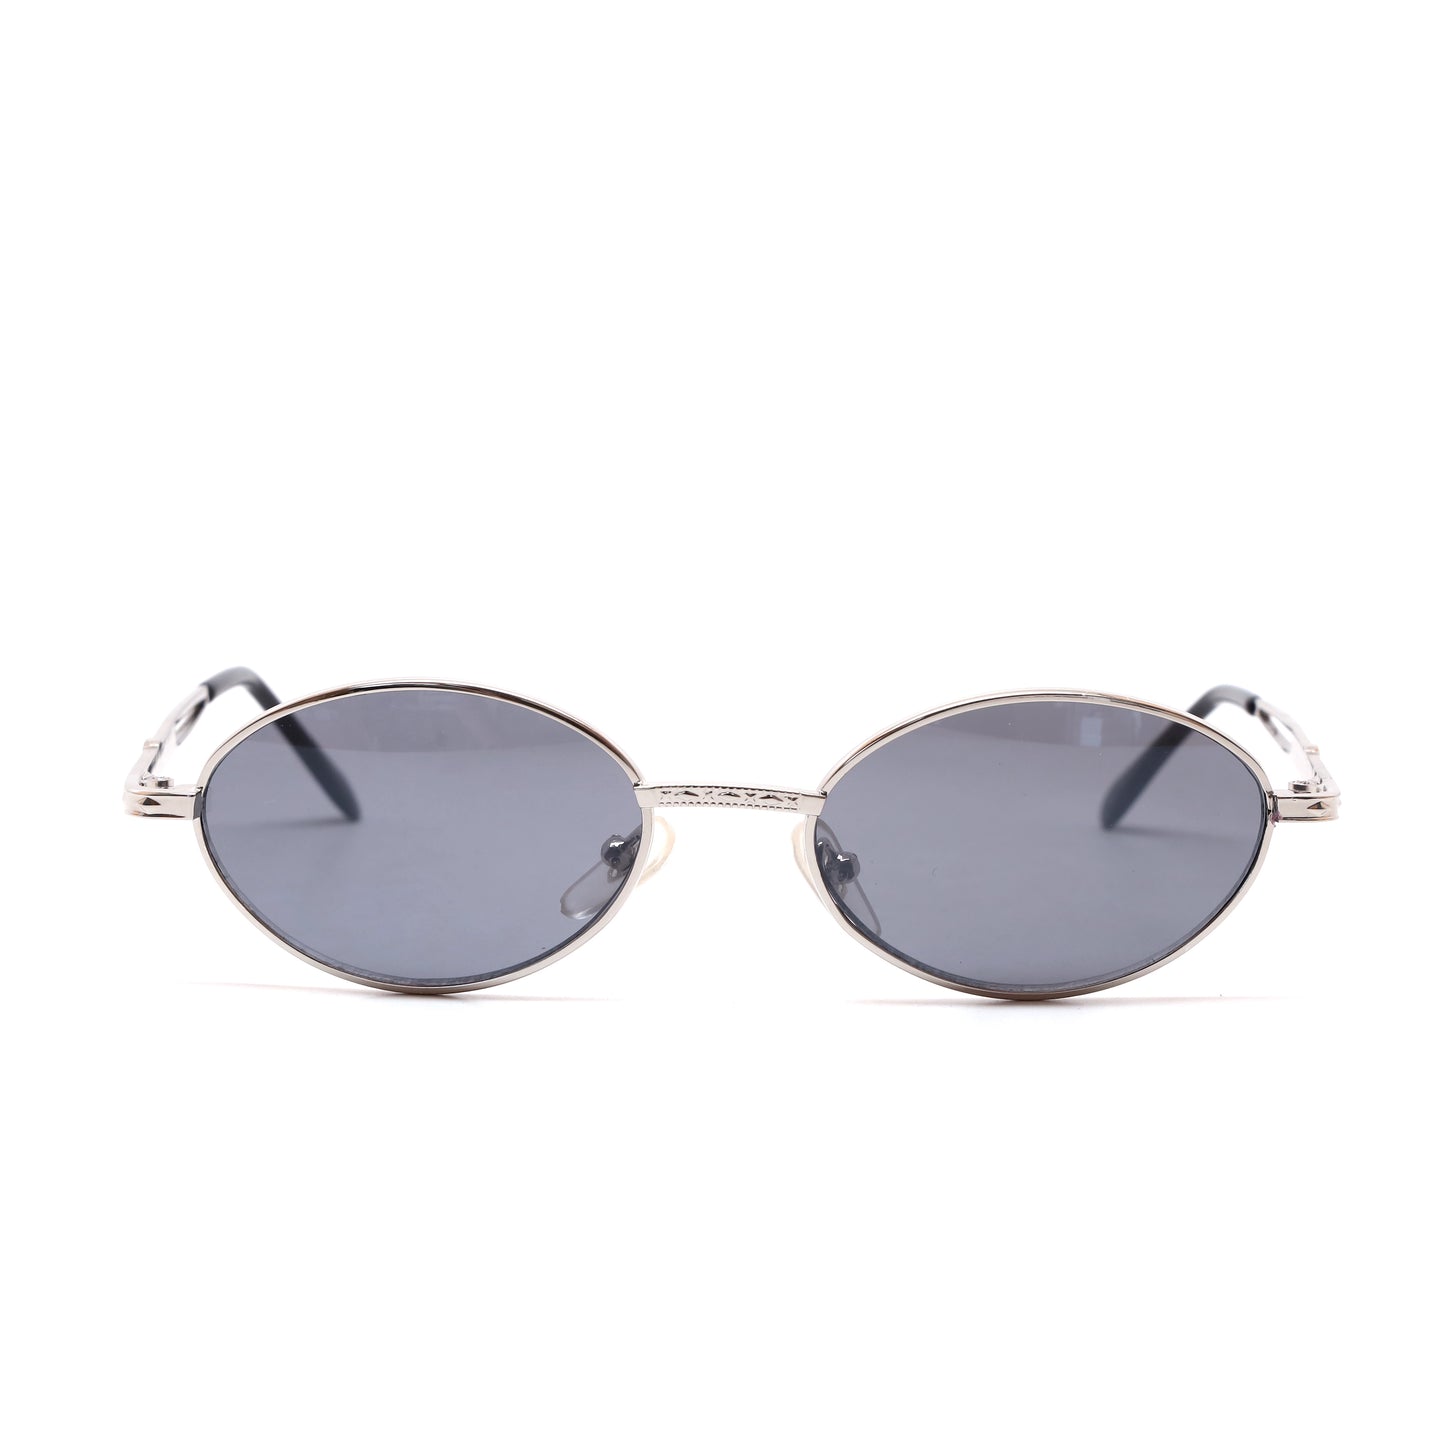 Vintage MINI Small Size 1992 Neo Santa Fe Oval Frame Sunglasses - Silver